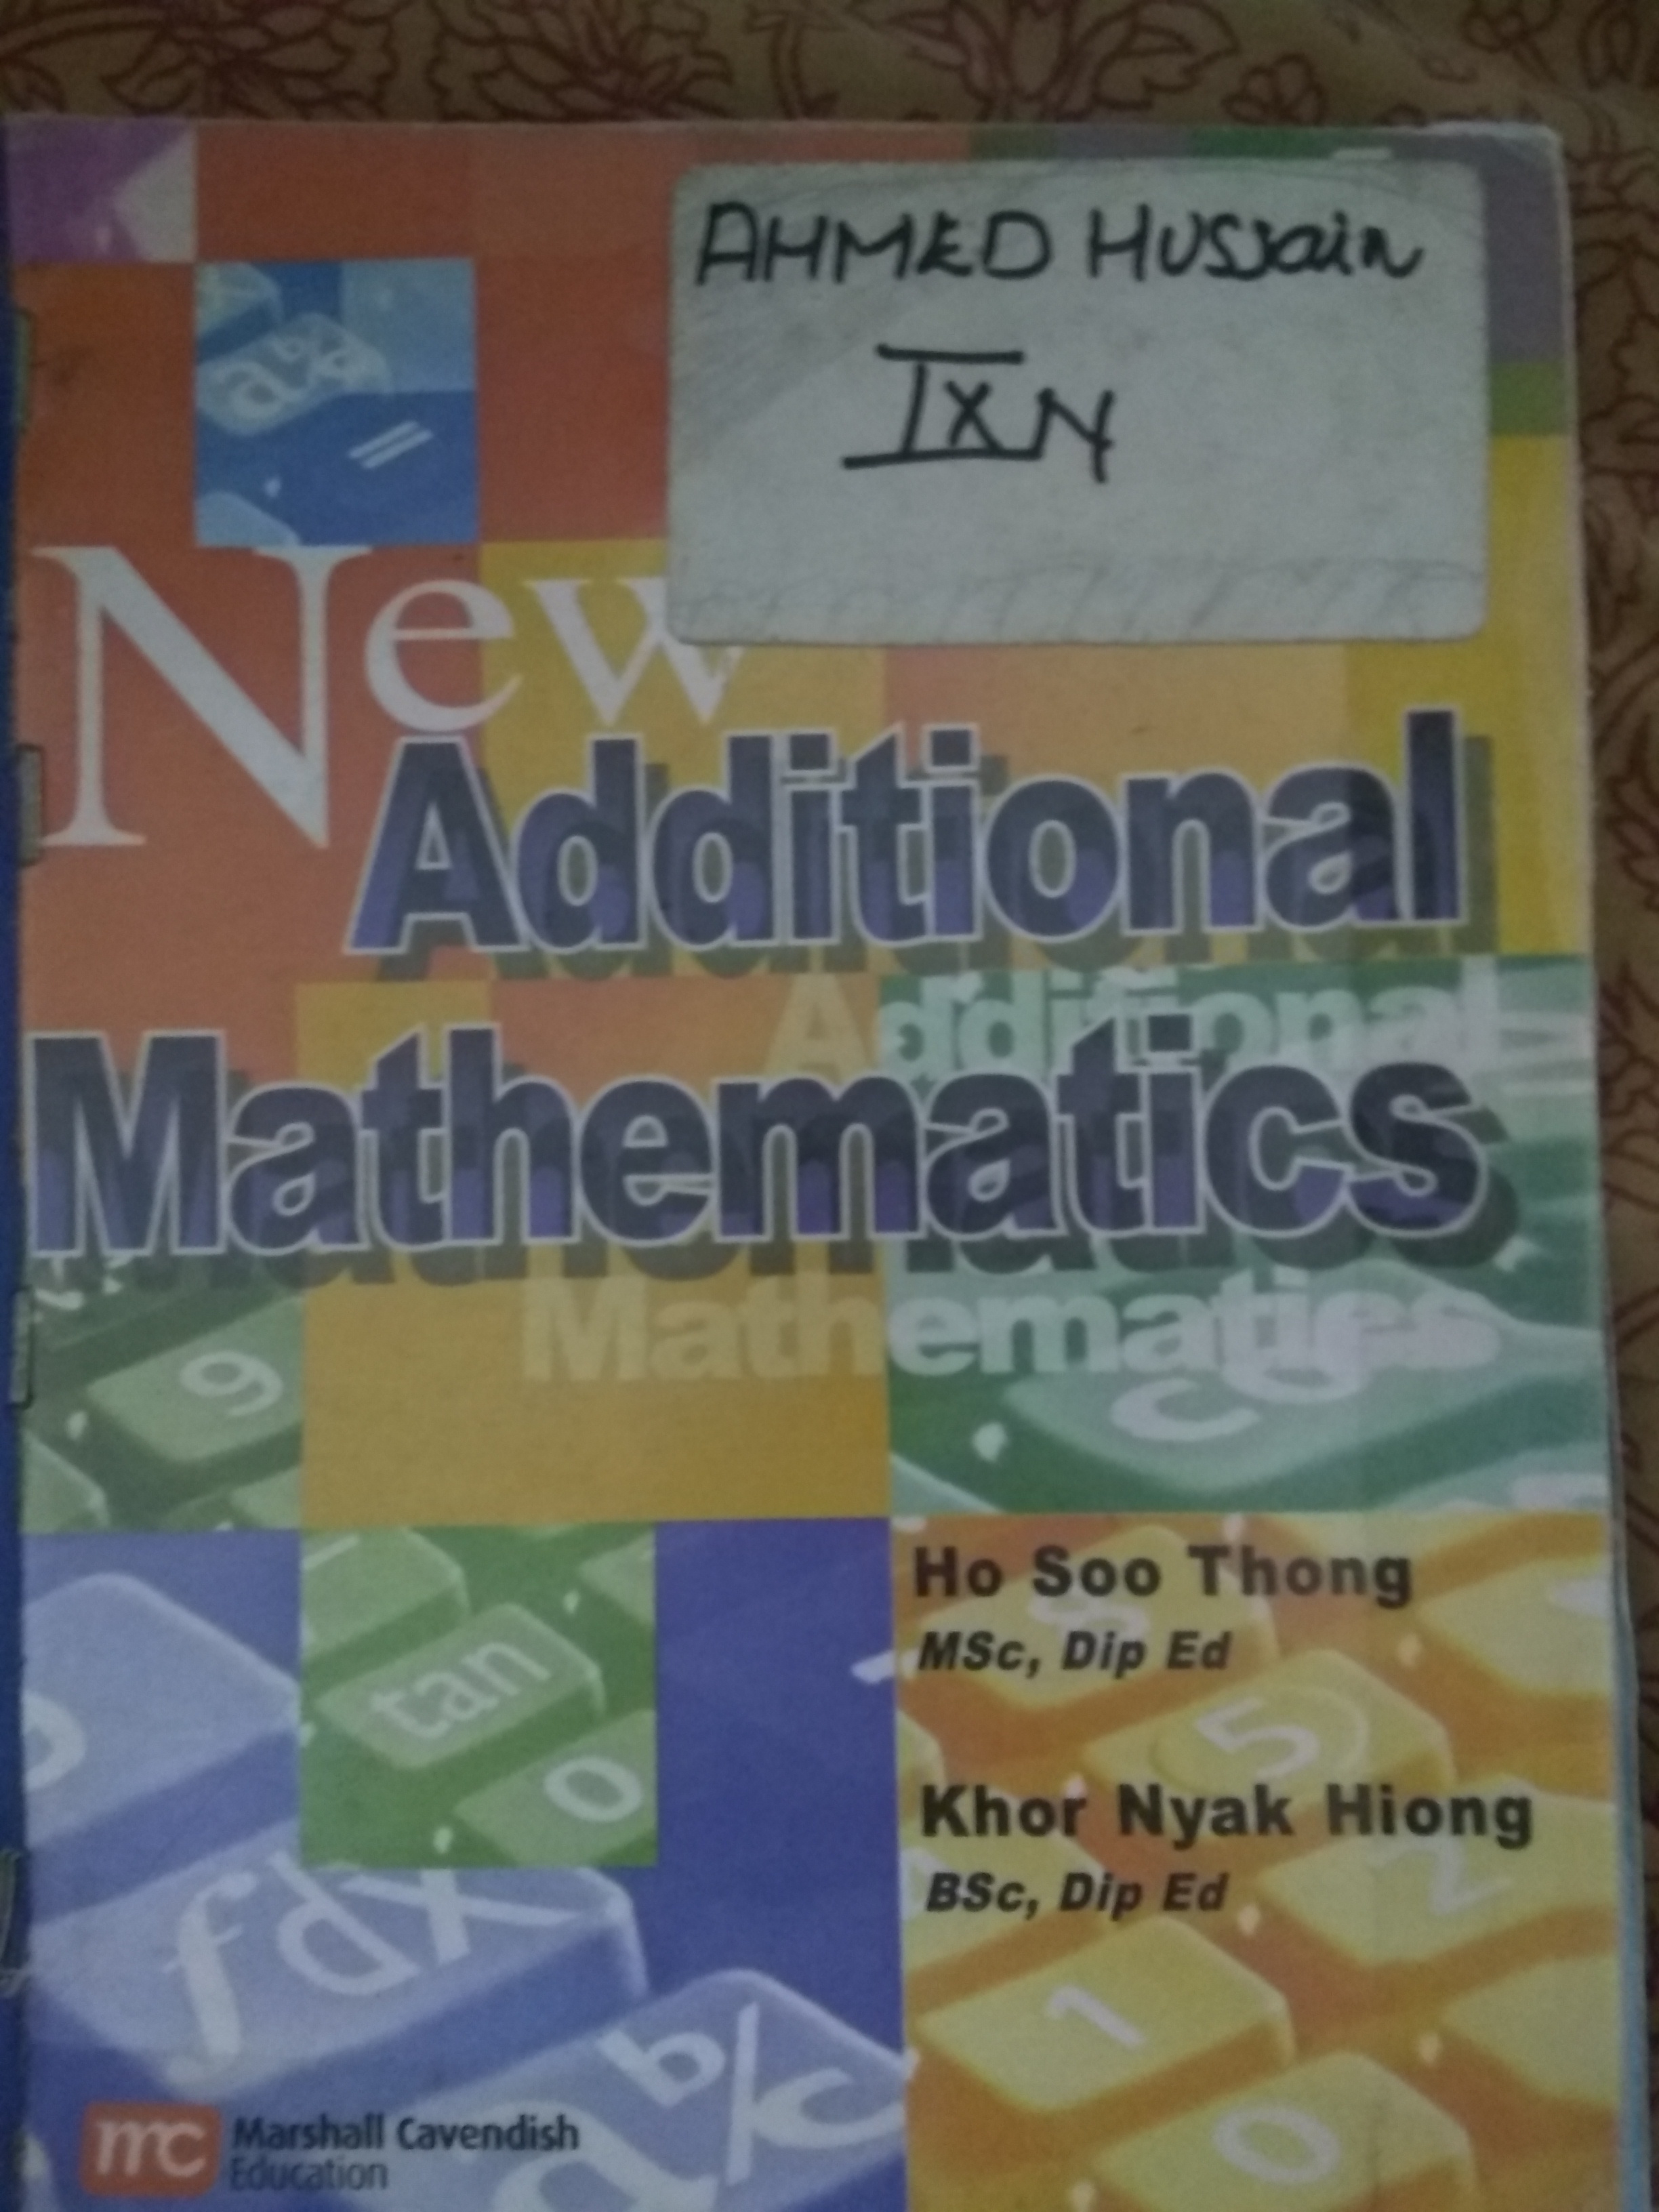 new additional mathematics